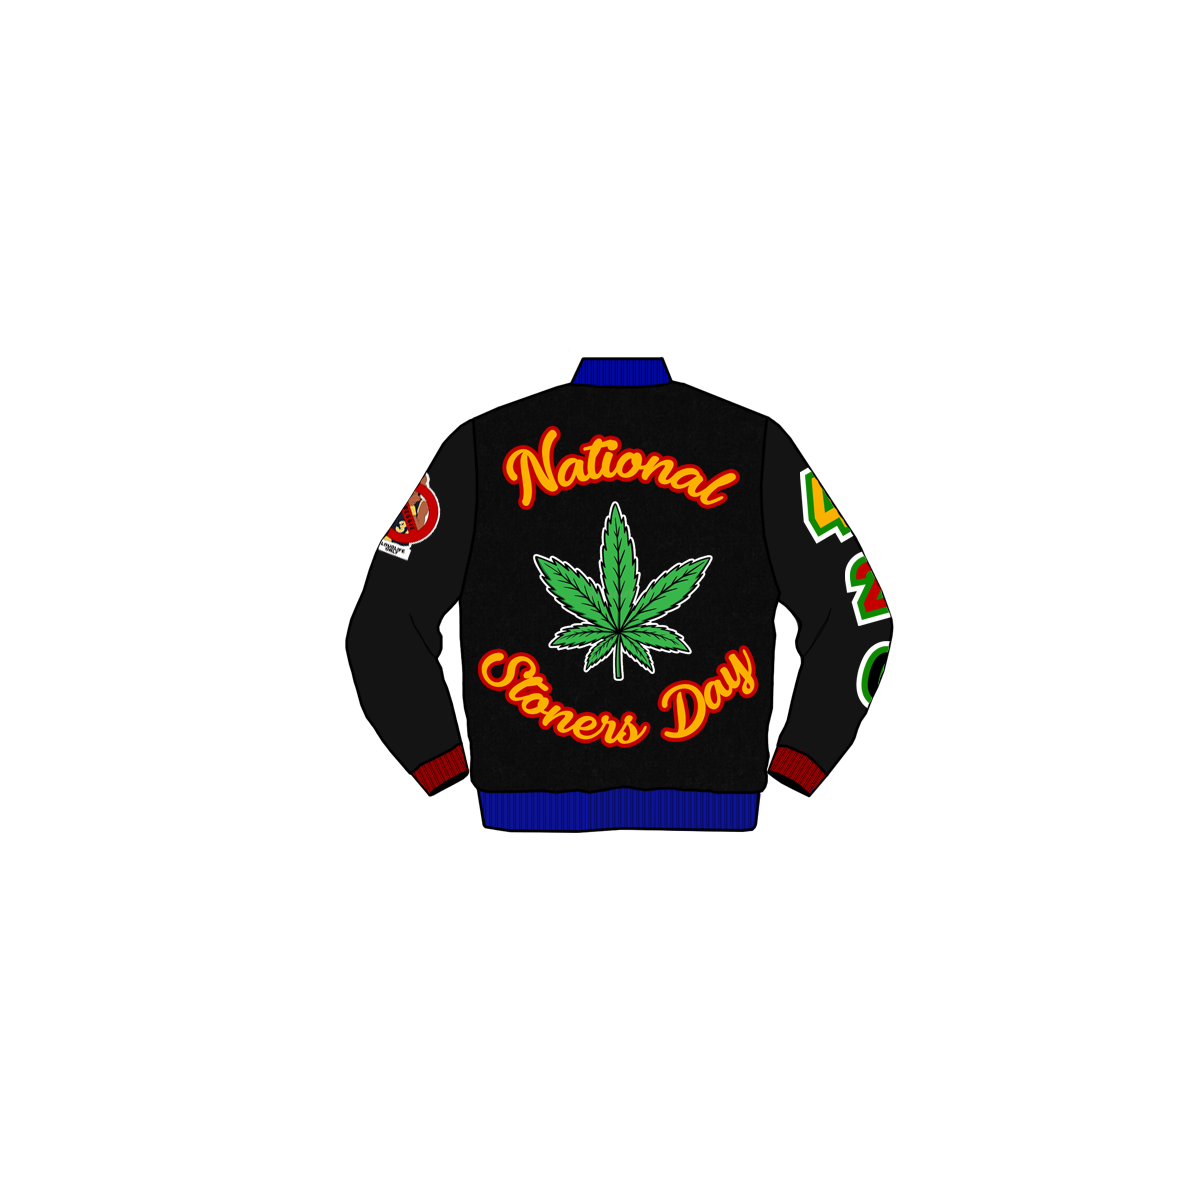 420 Varsity Jacket & SnapBack-PRE ORDER